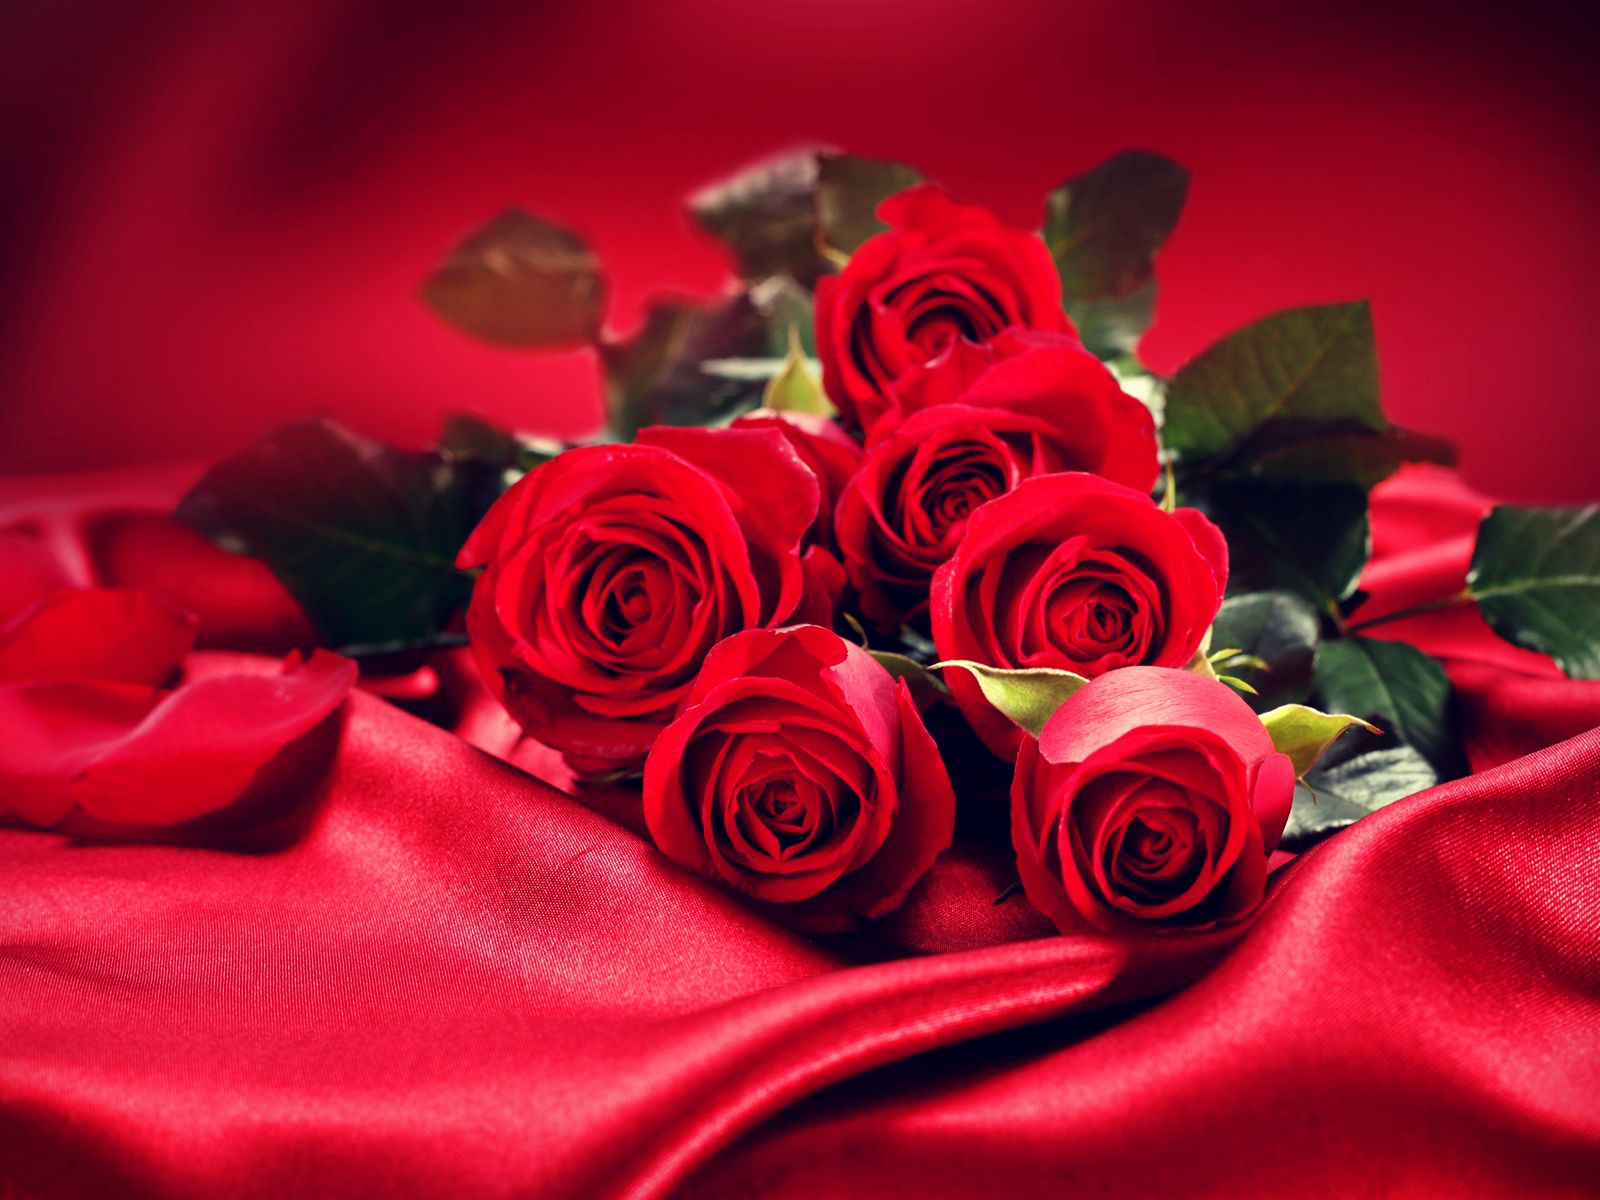 savepk: Red Rose HD 1080p - Flowers & Nature Free Download